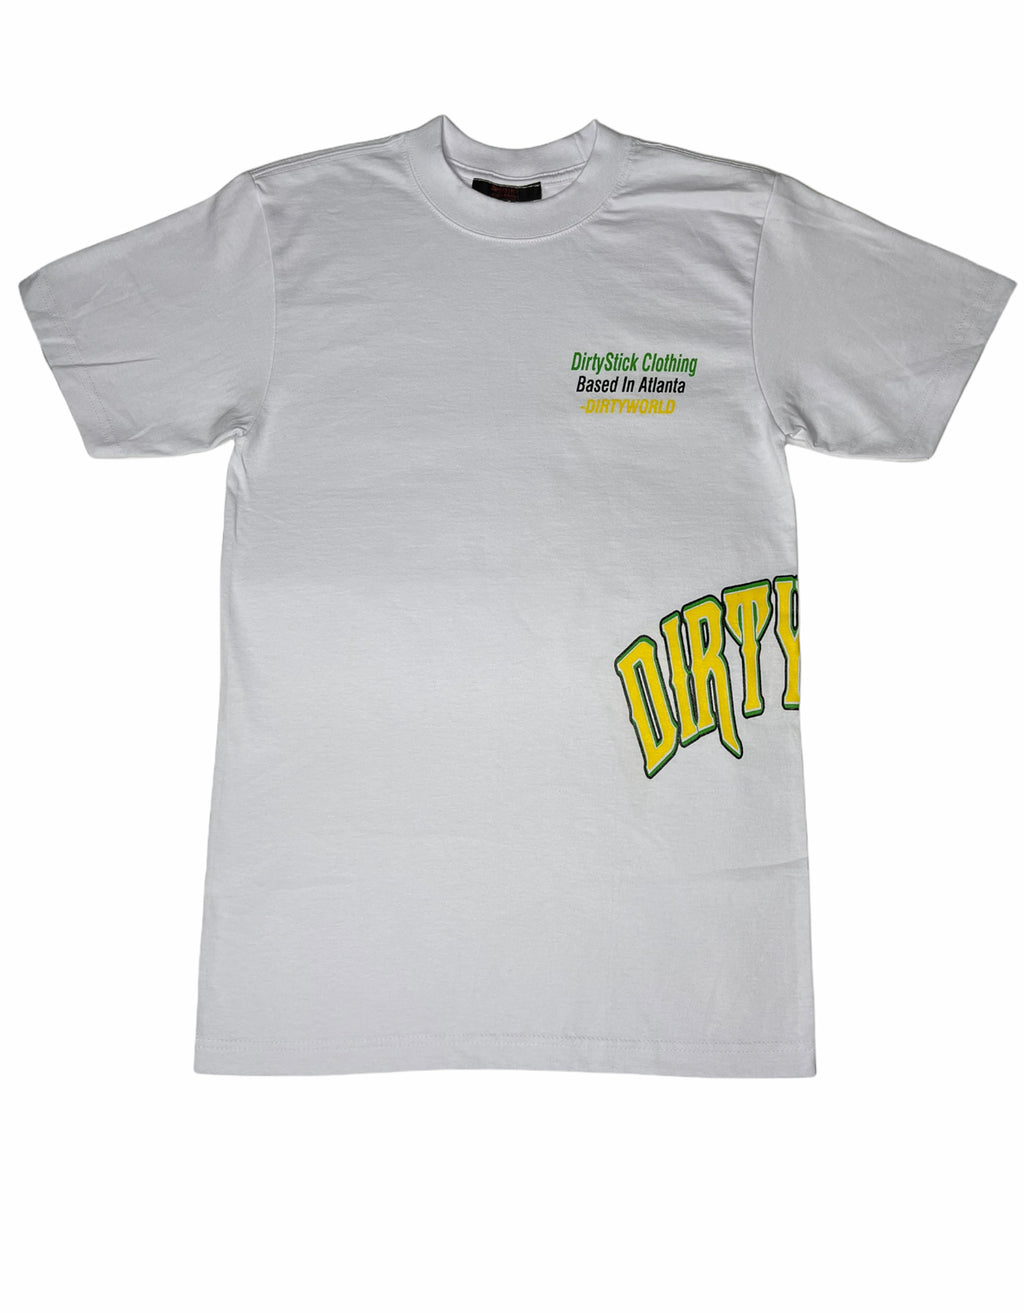 T-Shirt/DirtyWorld/Wht/Yel/Grn/Blk